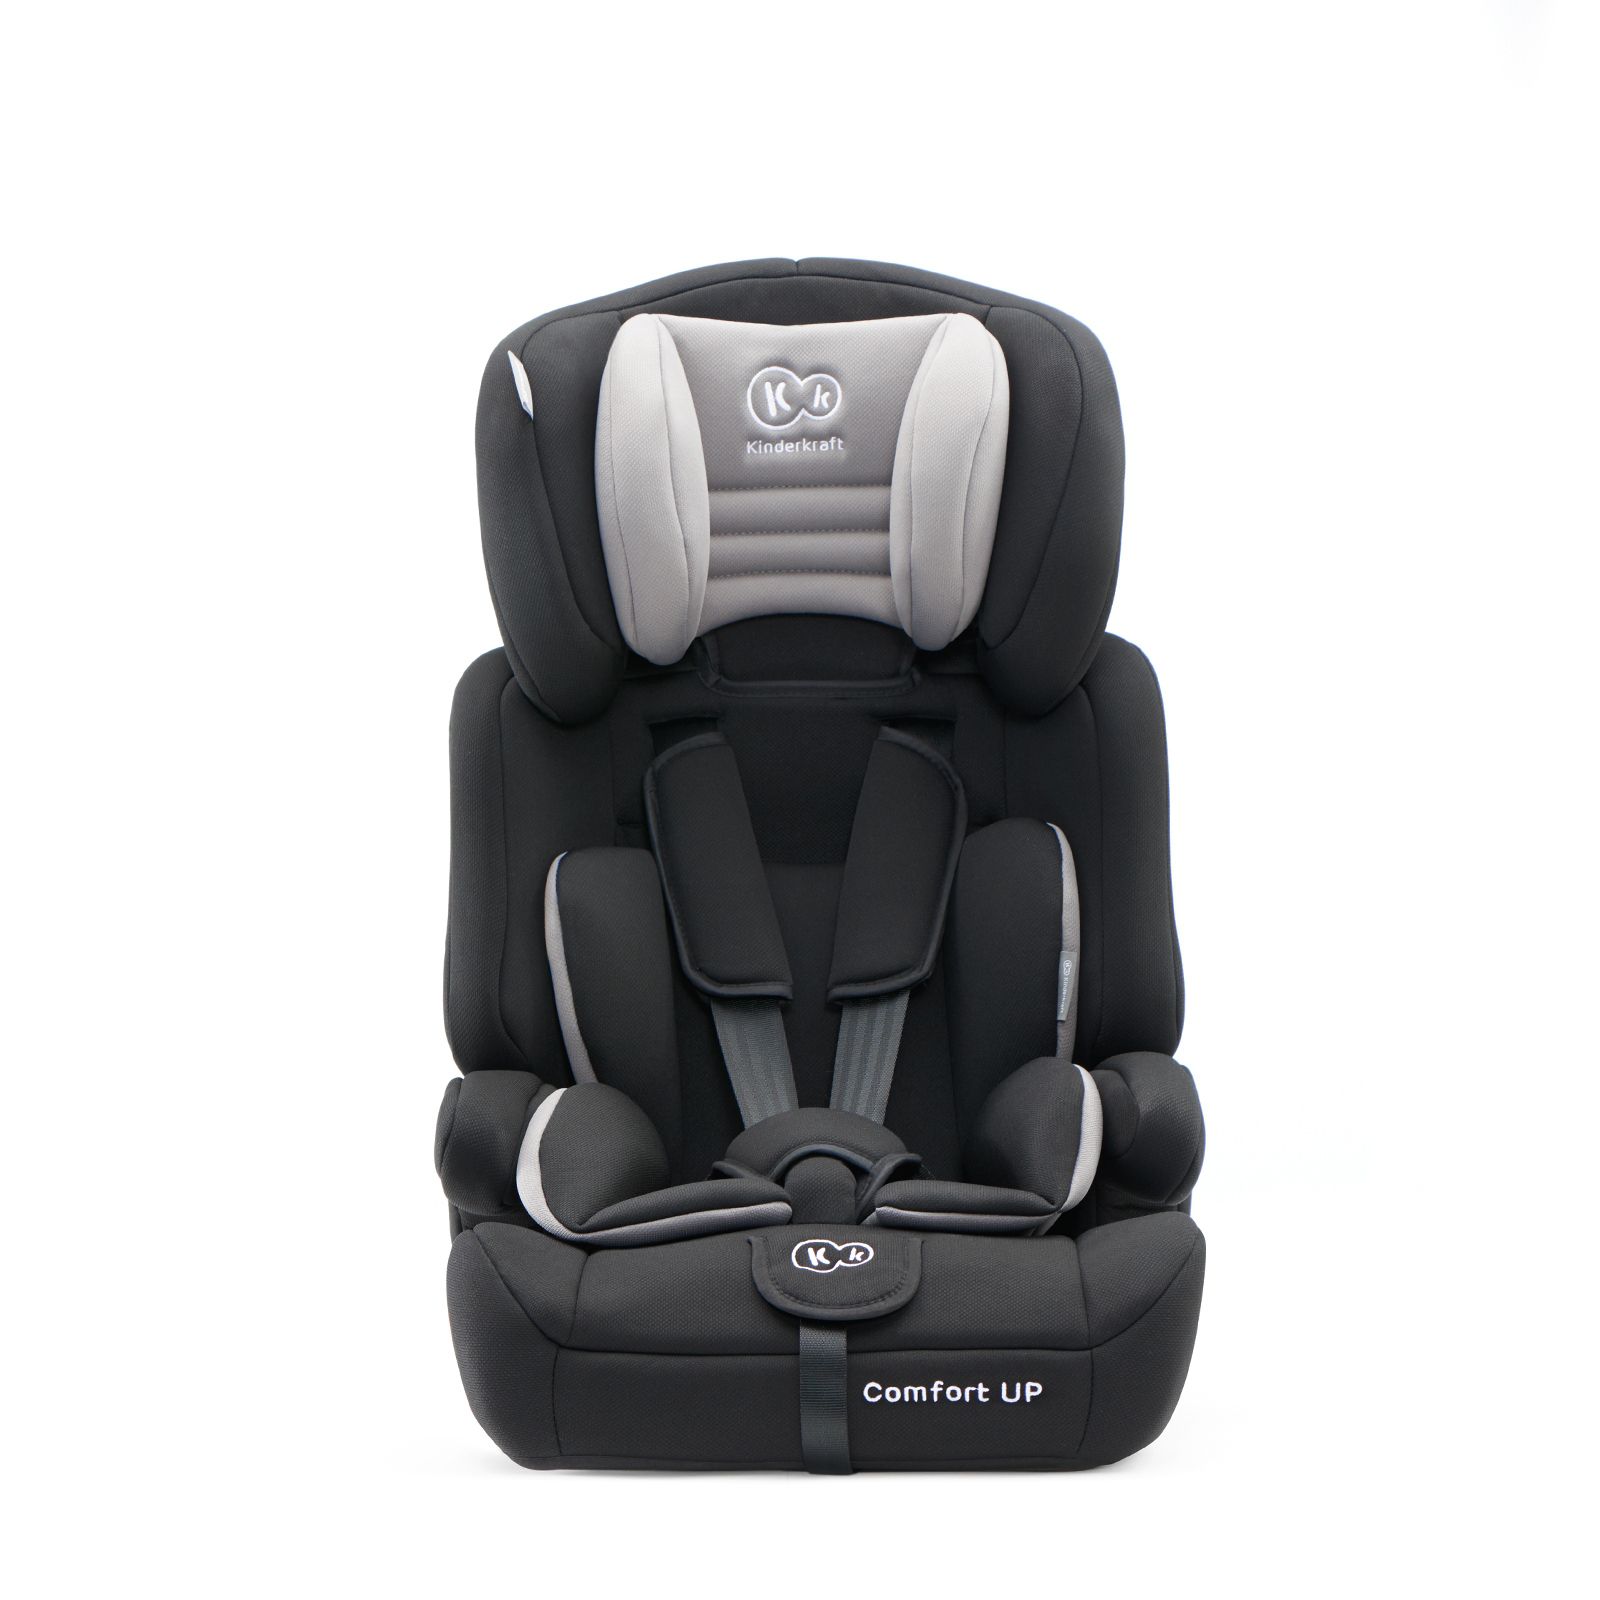 Car Seat COMFORT UP • Kinderkraft